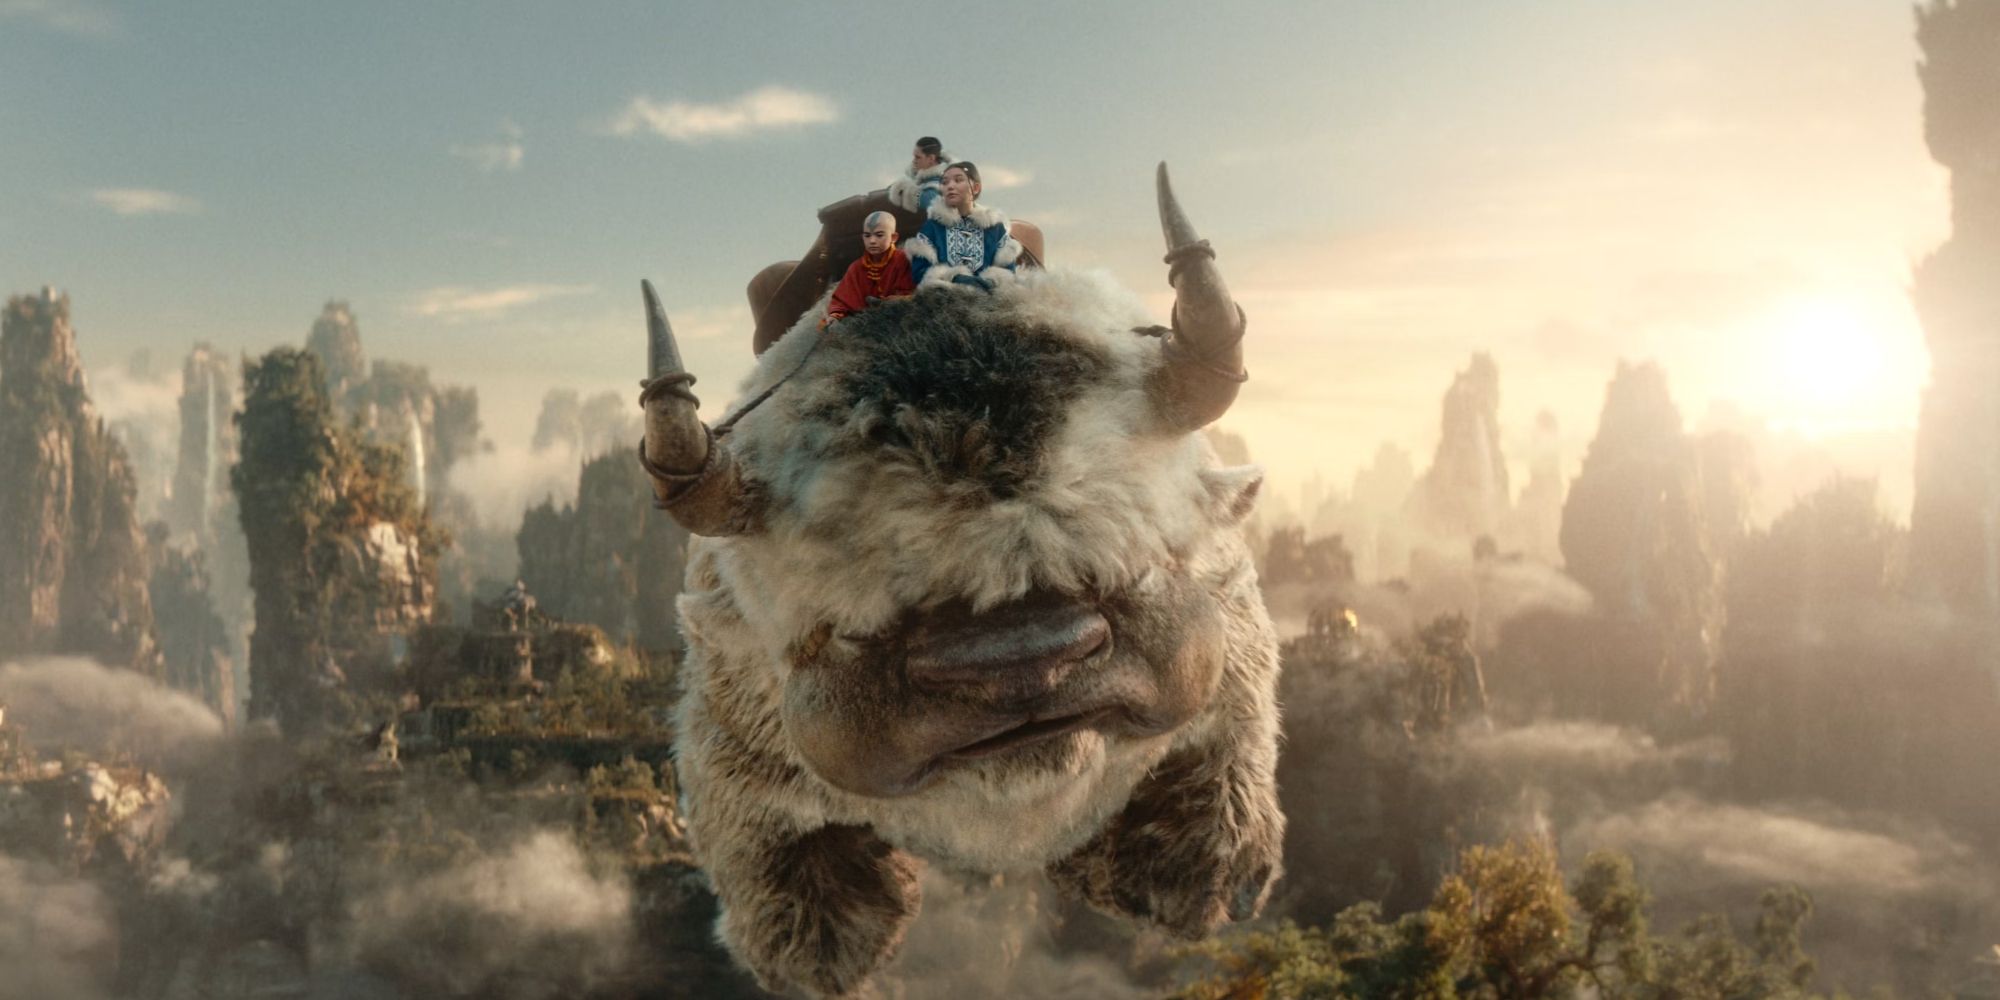 Aang, Sokka, and Katara riding Appa in the Avatar the Last Airbender trailer